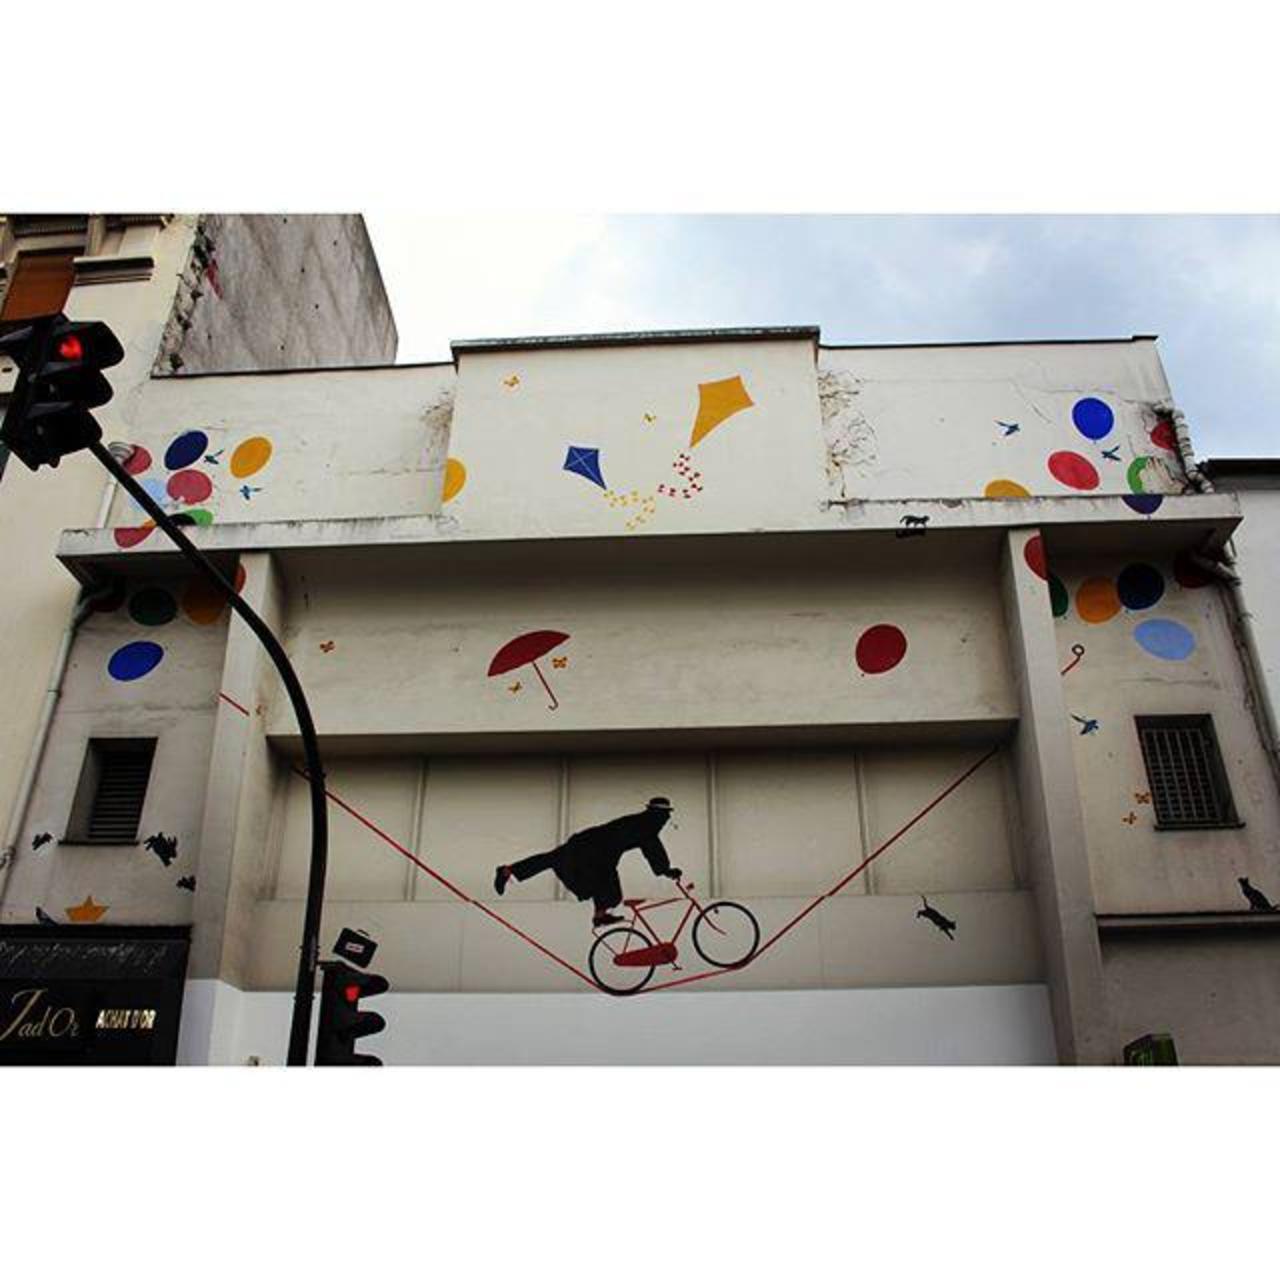 #Mural by #Nemo in #Paris

#StreetArt #UrbanArt #Graffiti #Painting #Fresque #ArtUrbain #Paris20 #Street #Rue #Fran… http://t.co/O5hGGMFkXJ